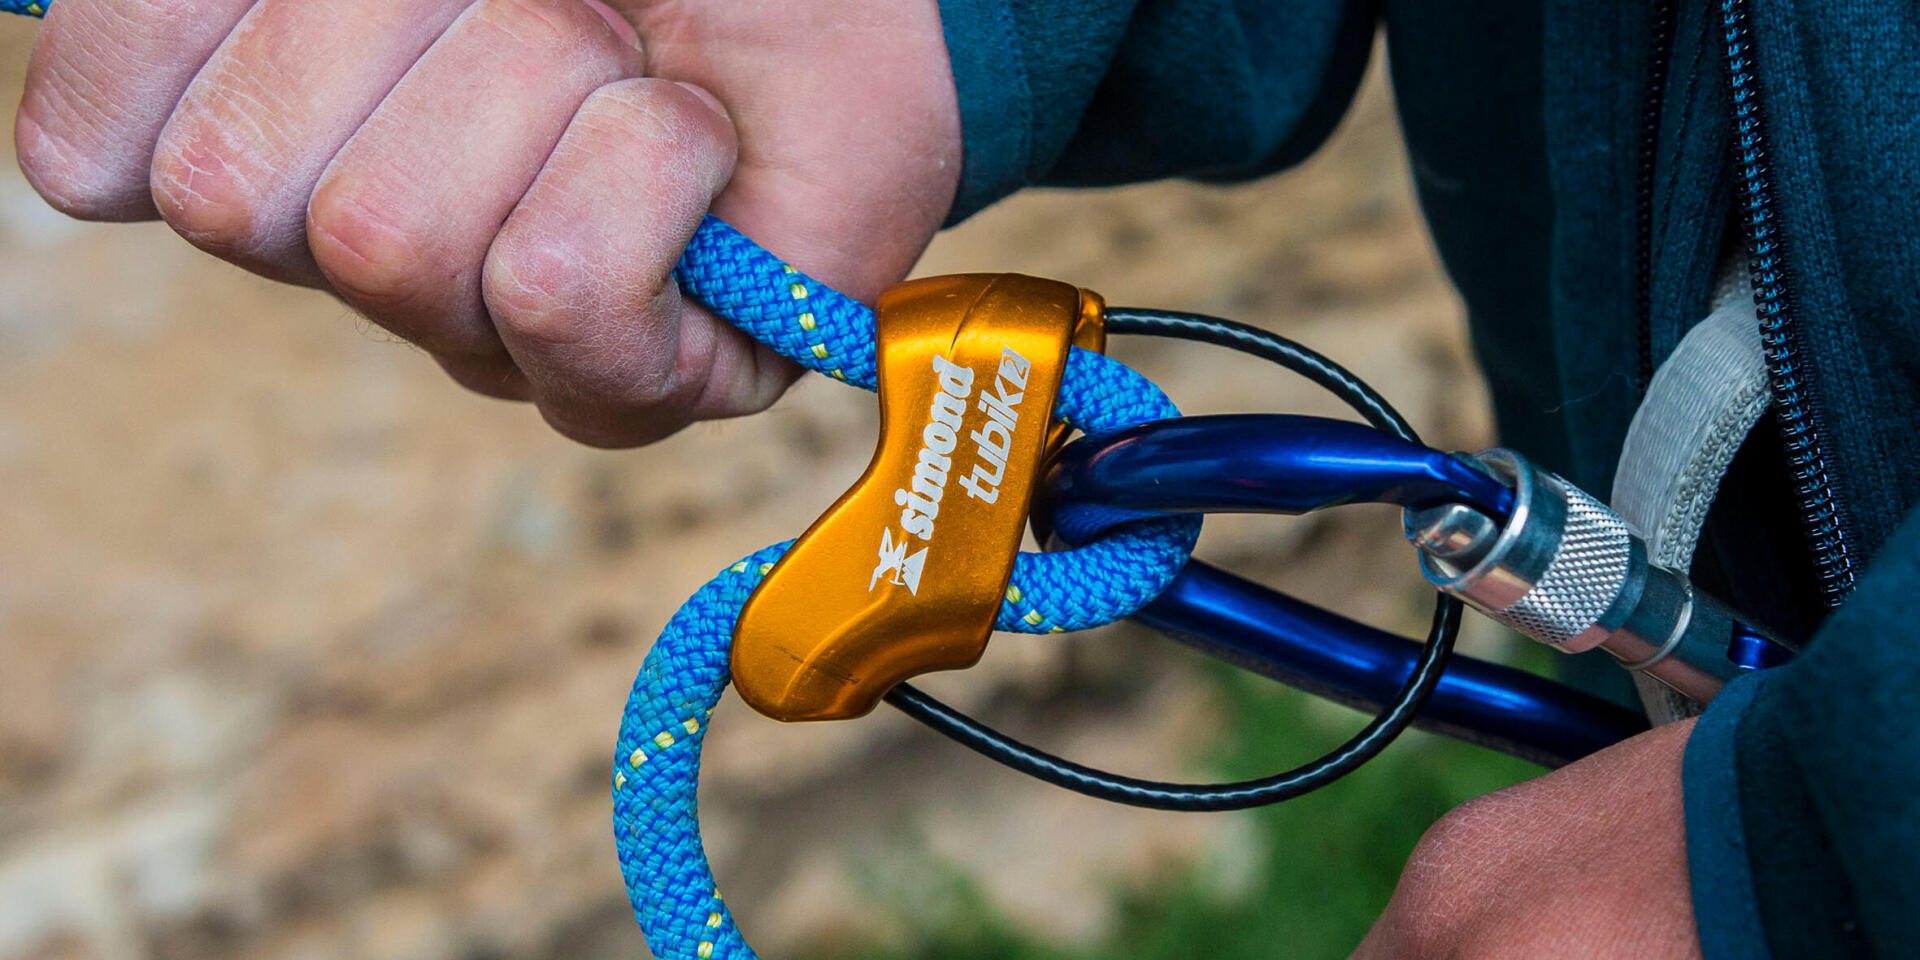 Single-pitch climbing using a single rope